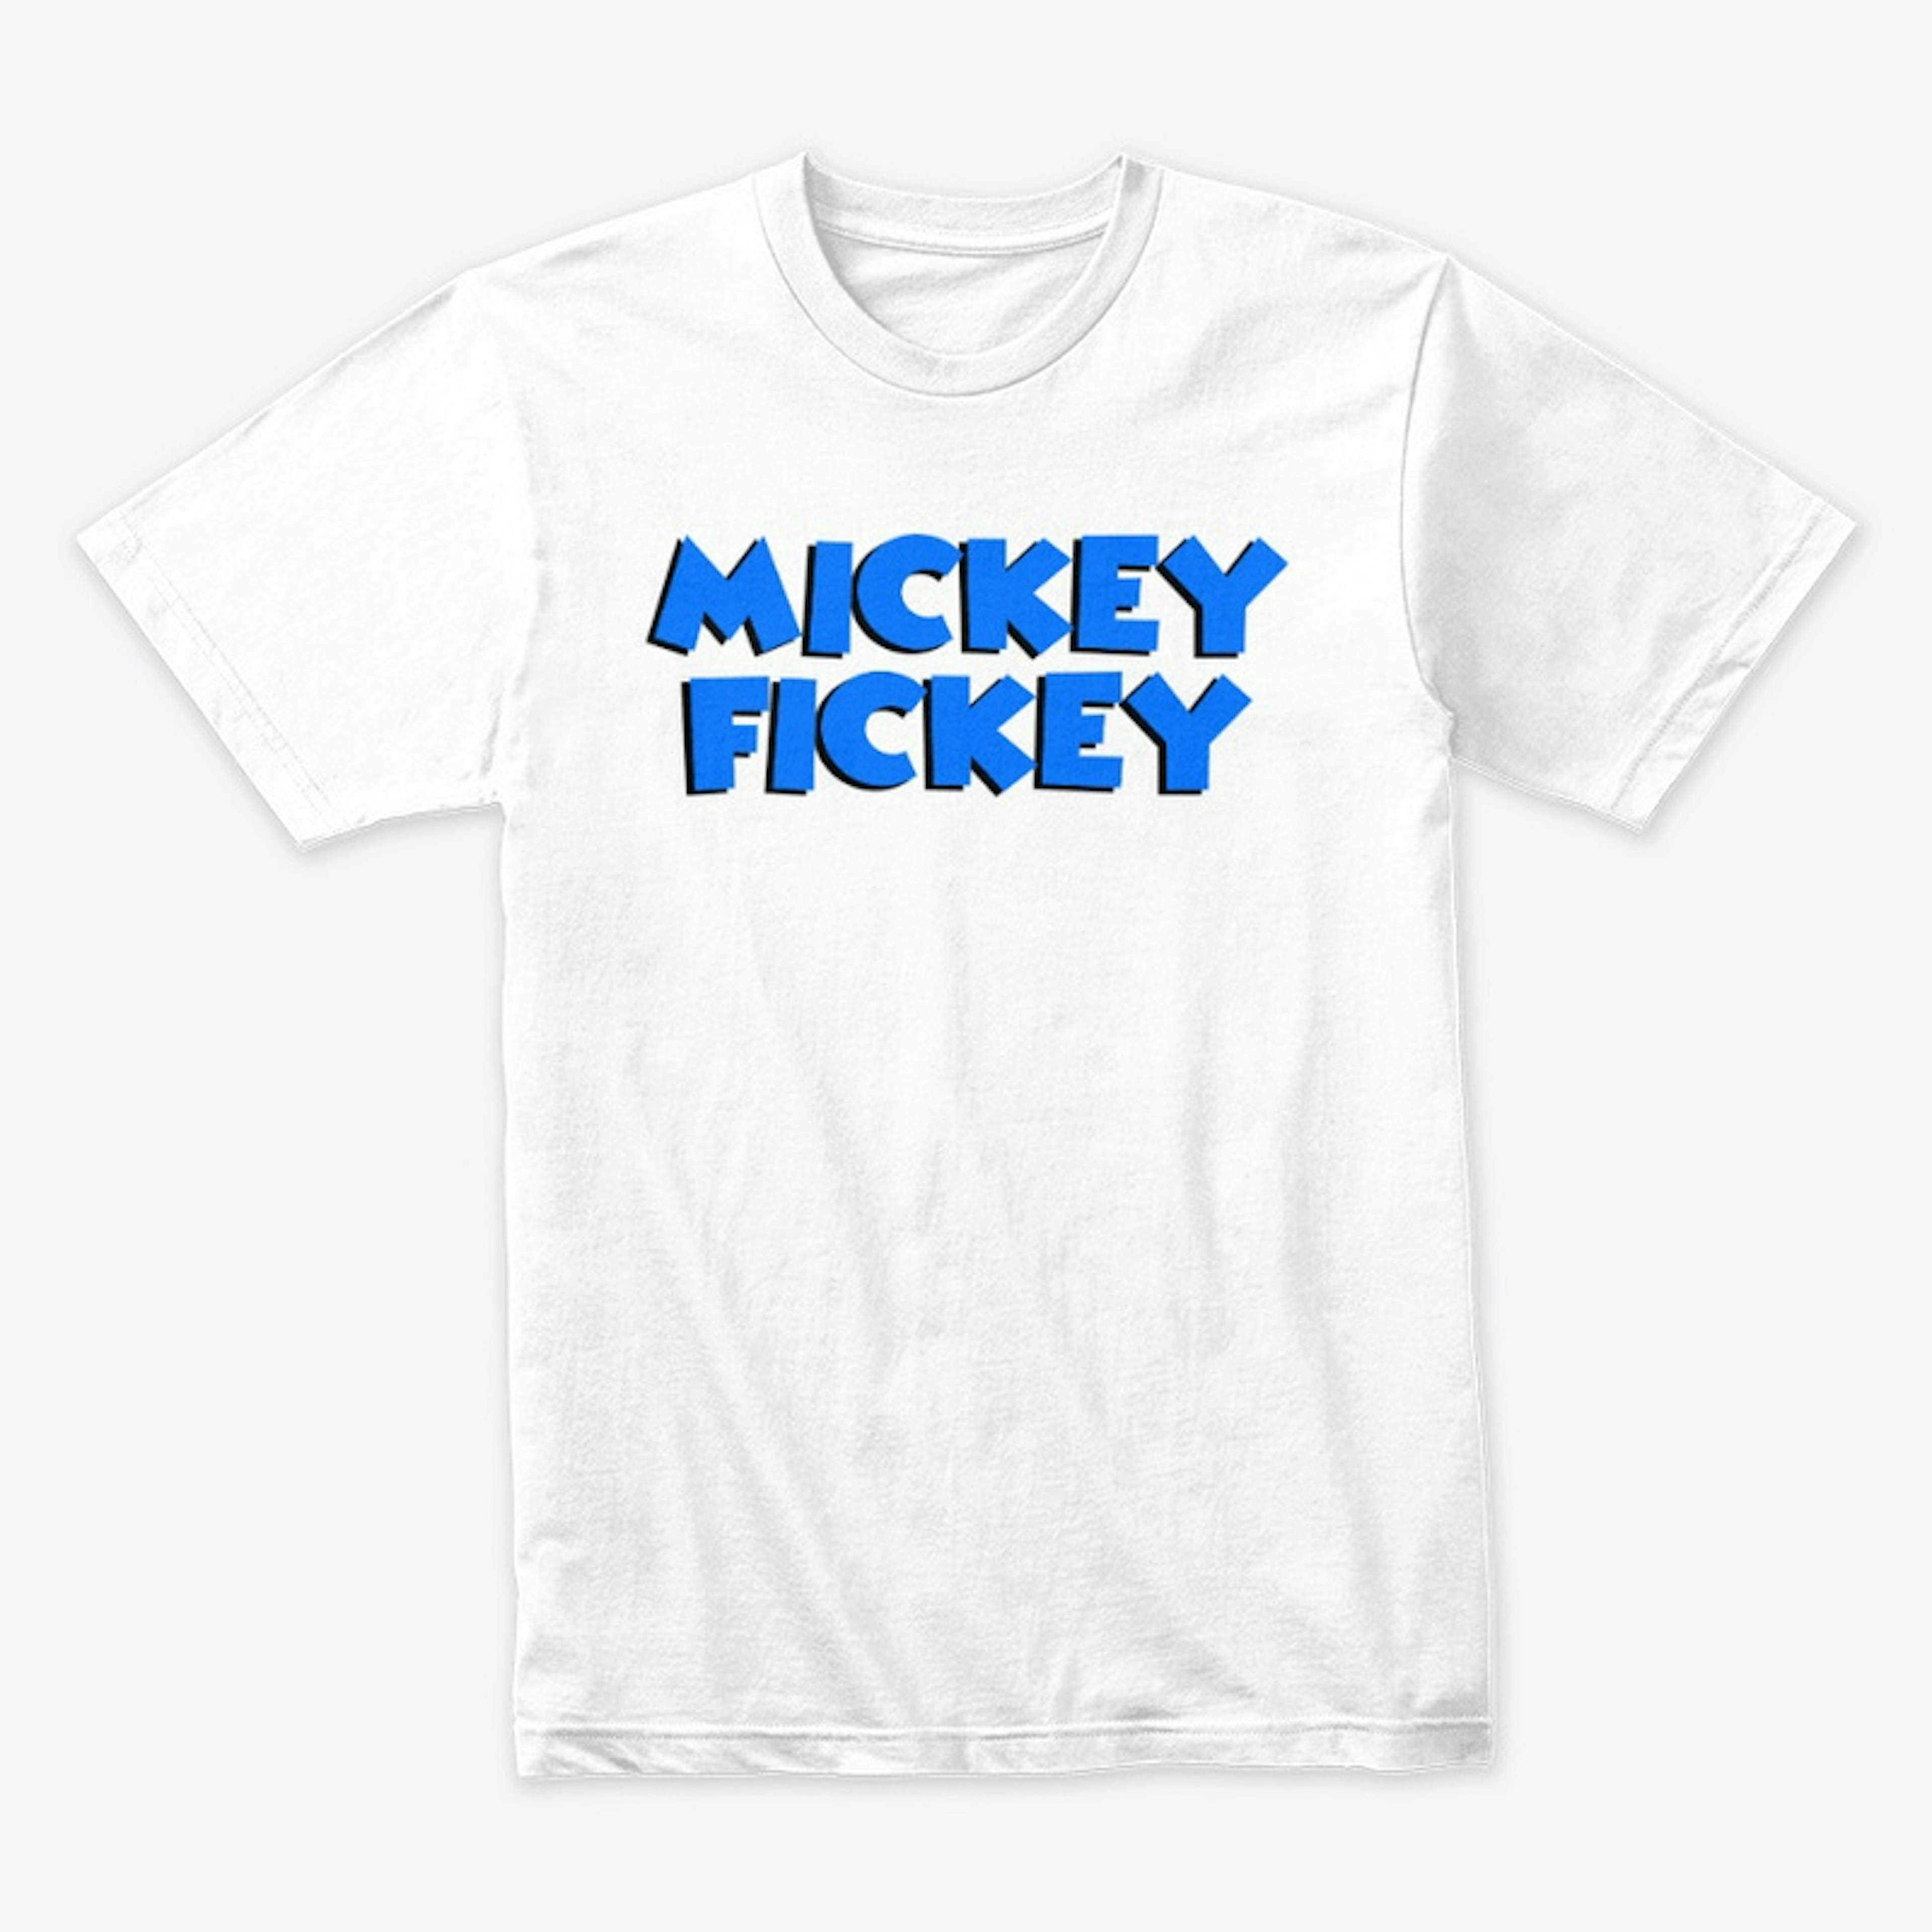 Mickey Fickey (Blue Design)